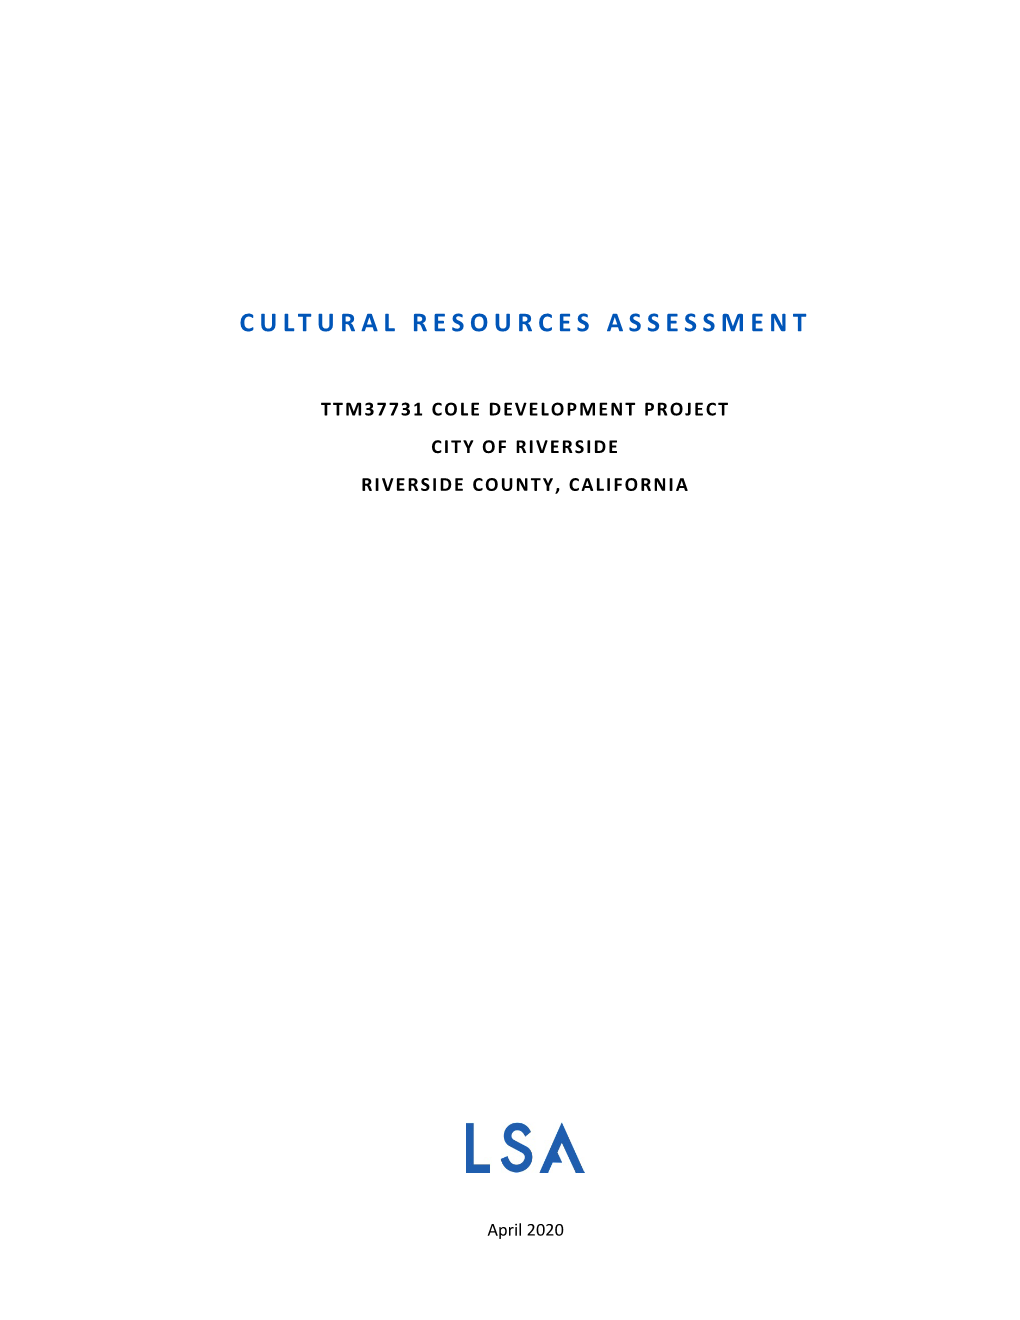 Cultural Resources Assessment